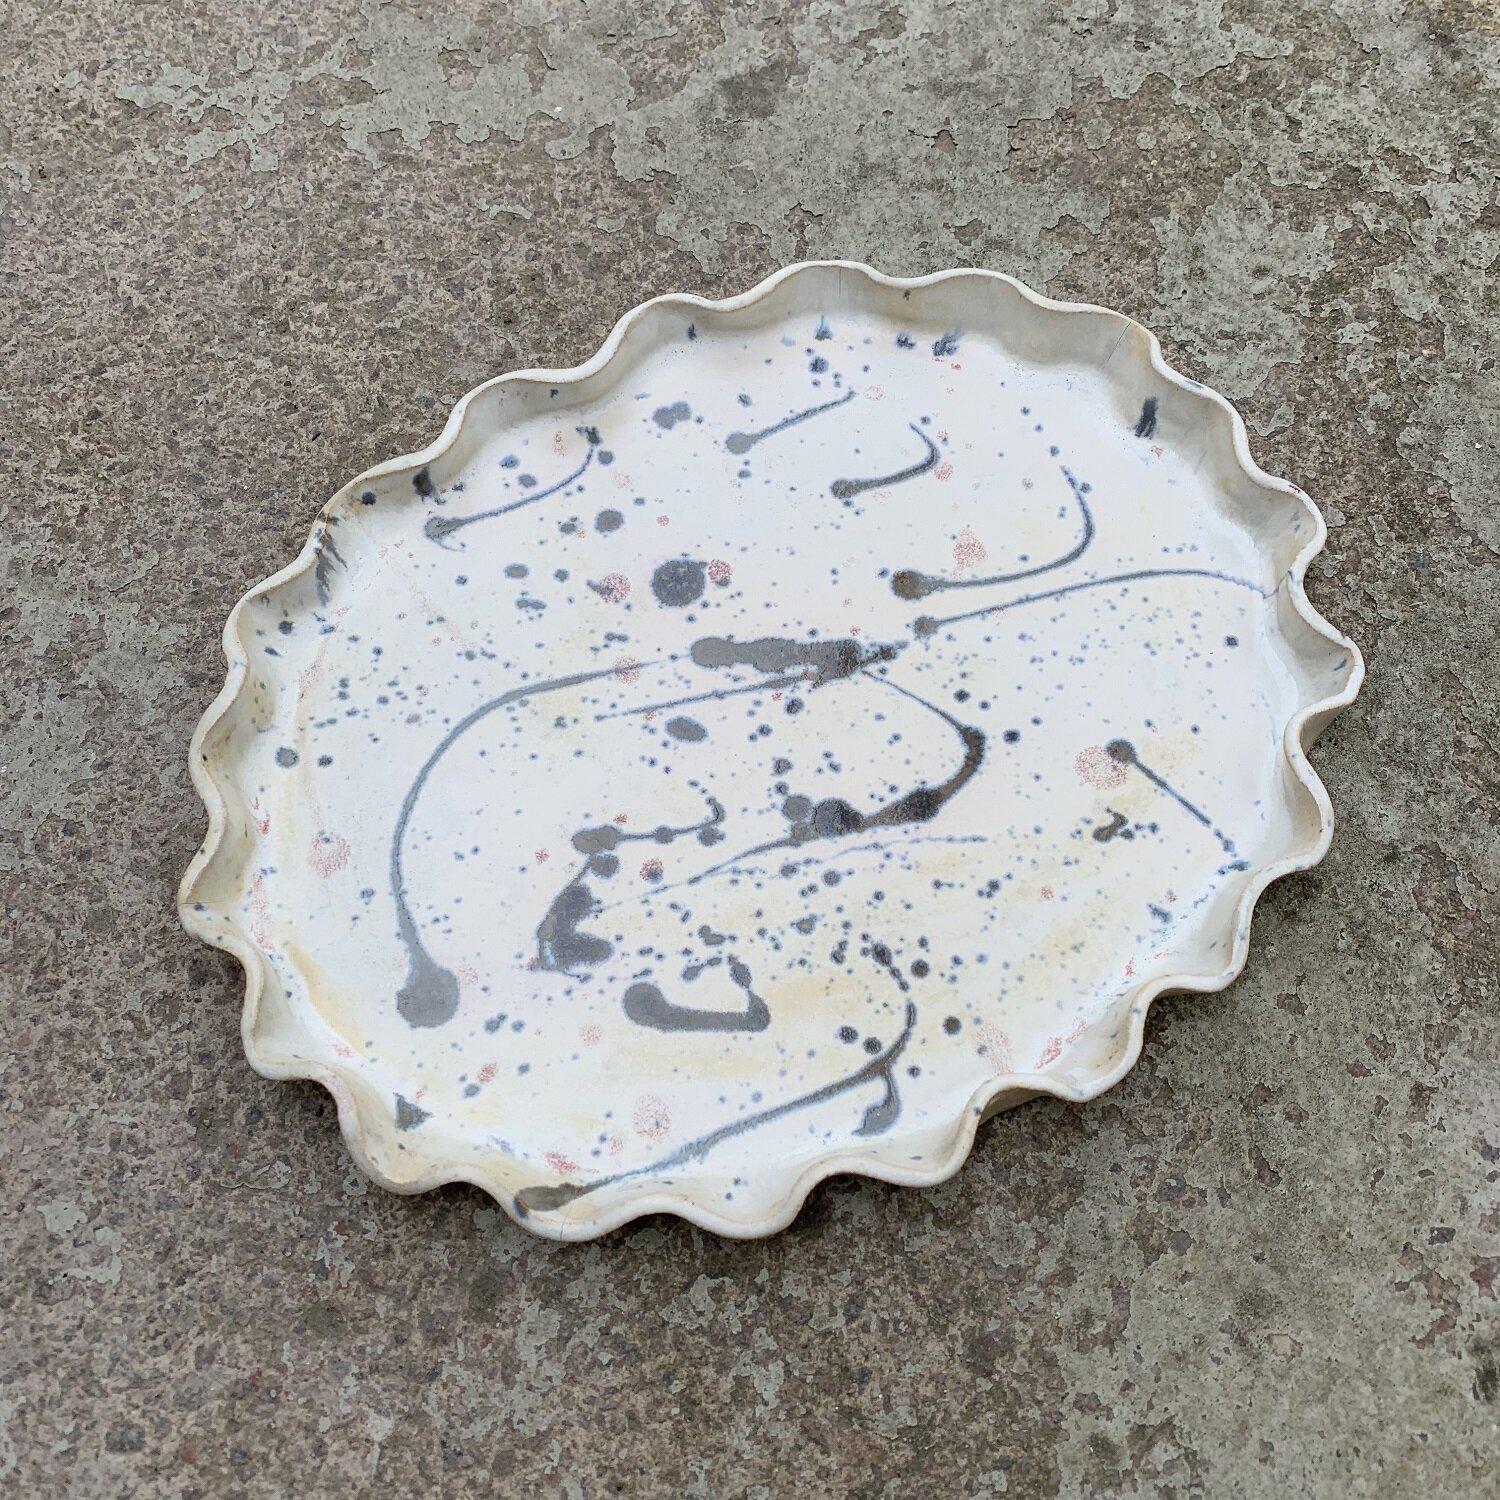 Andrew walker ceramics class student splatter plate.jpg